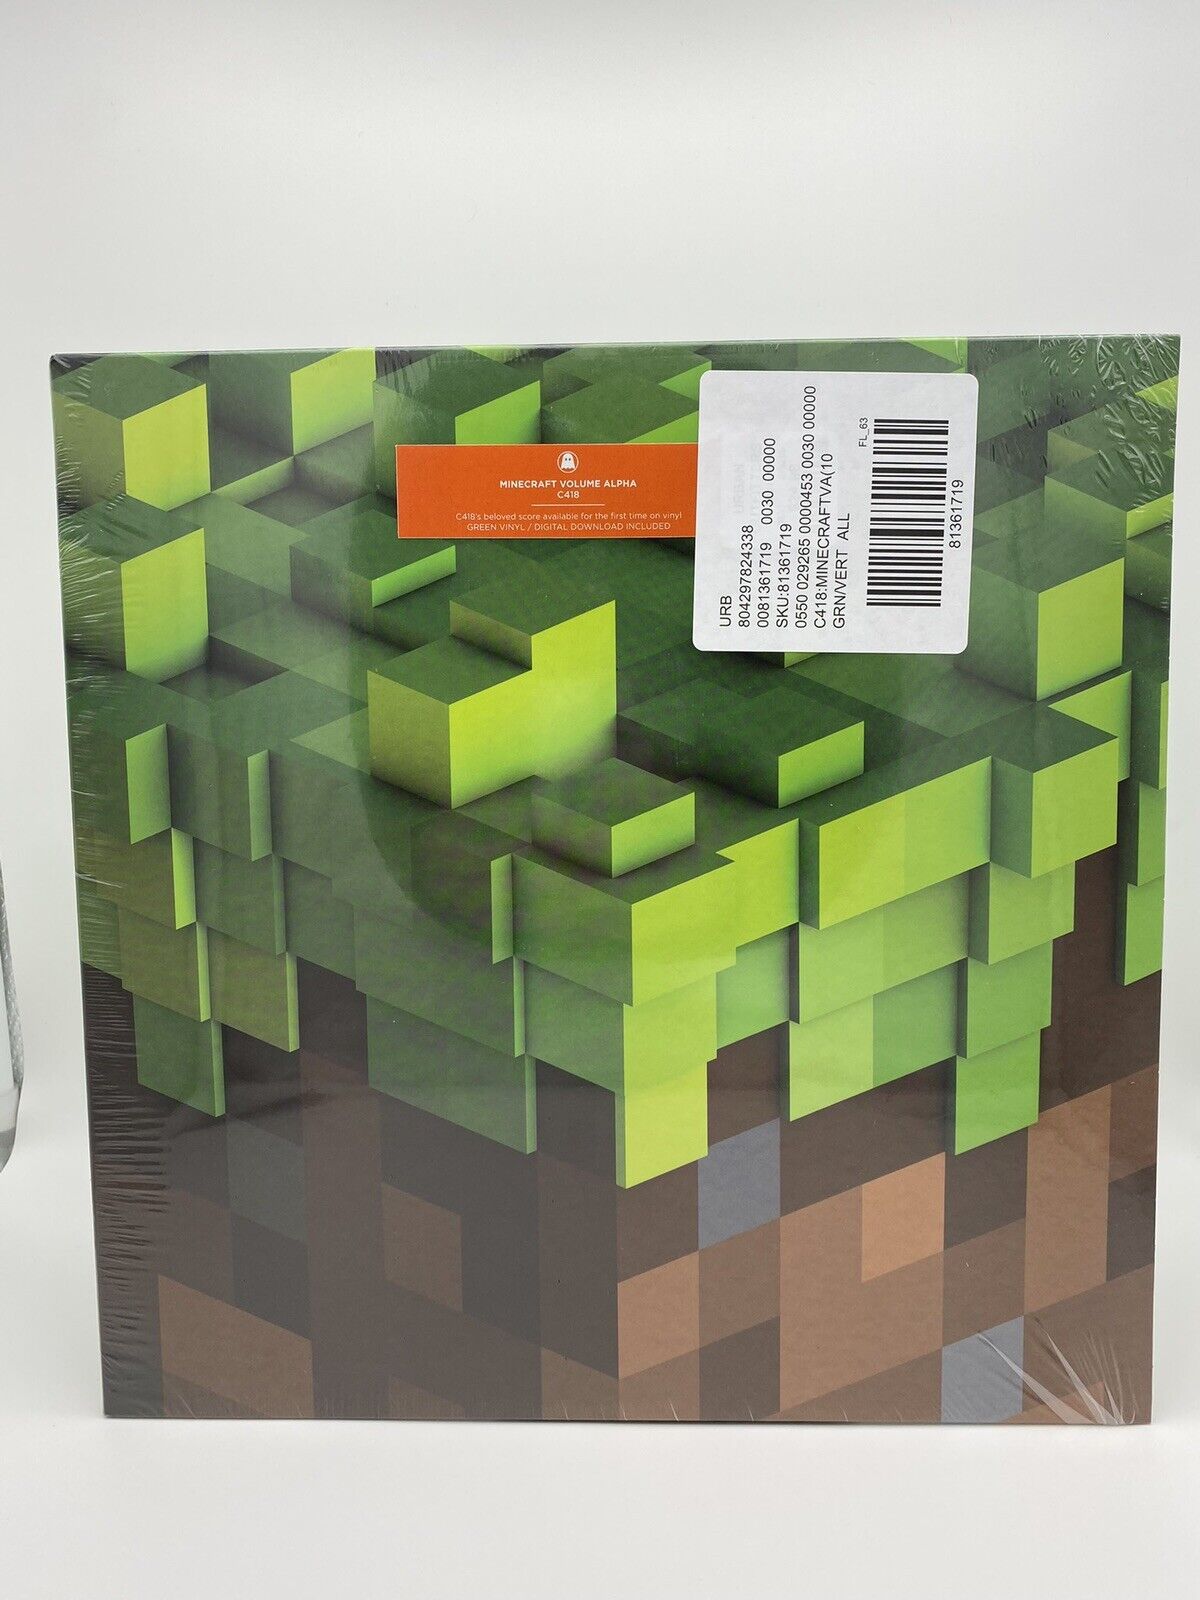 C418 Minecraft Volume Green Vinyl LP Record Video Game OST 804297824338 |